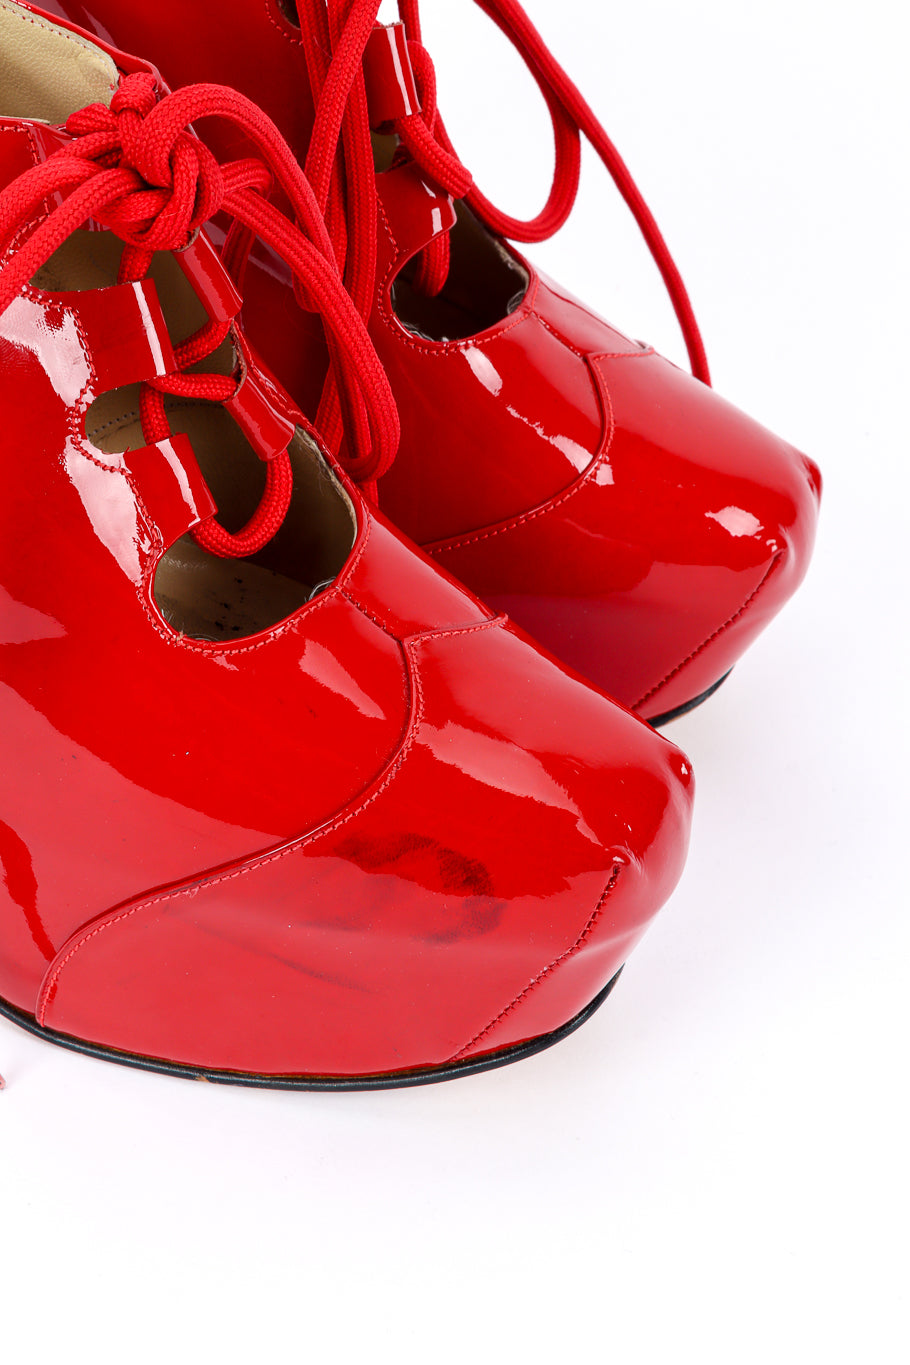 Vintage Vivienne Westwood Patent Leather Elevated Ghillie Platforms right shoe toe scuff closeup @recessla